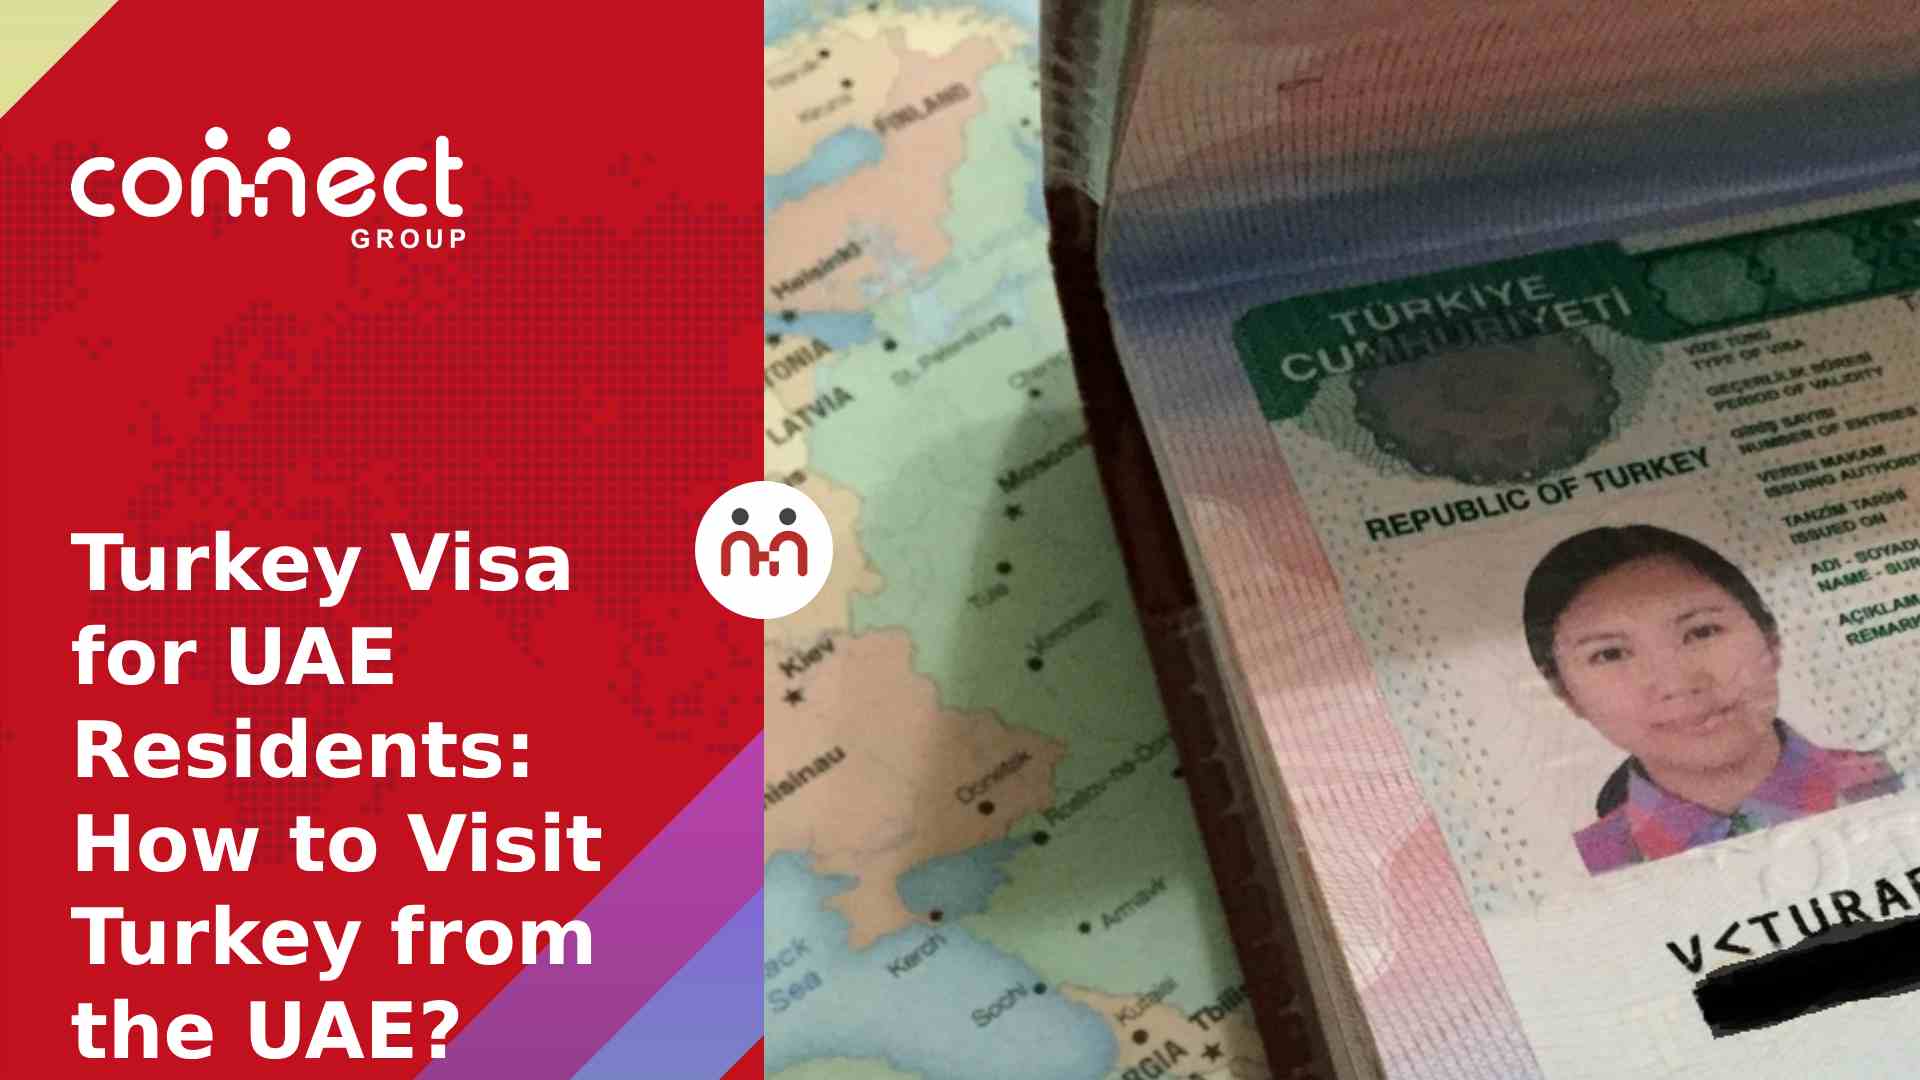 Turkey Visa for UAE residents